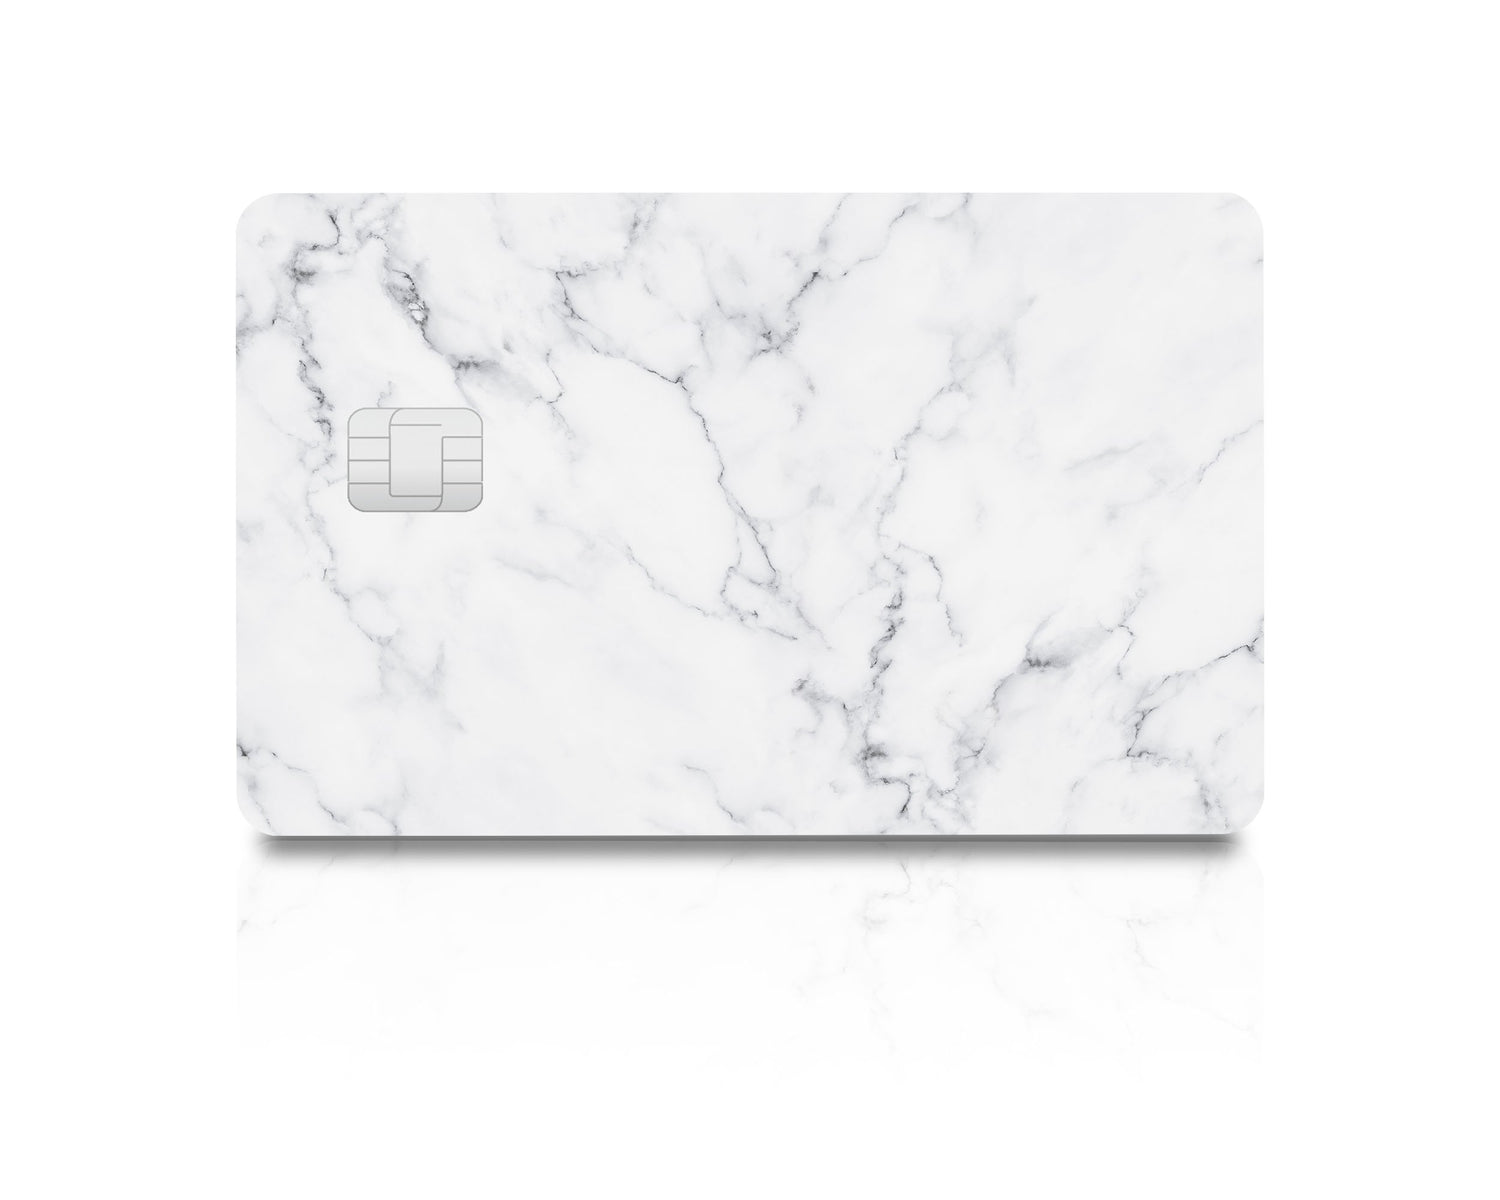 Flex Designs Credit Card White Marble Full Skins - Pattern  & Debit Card Skin